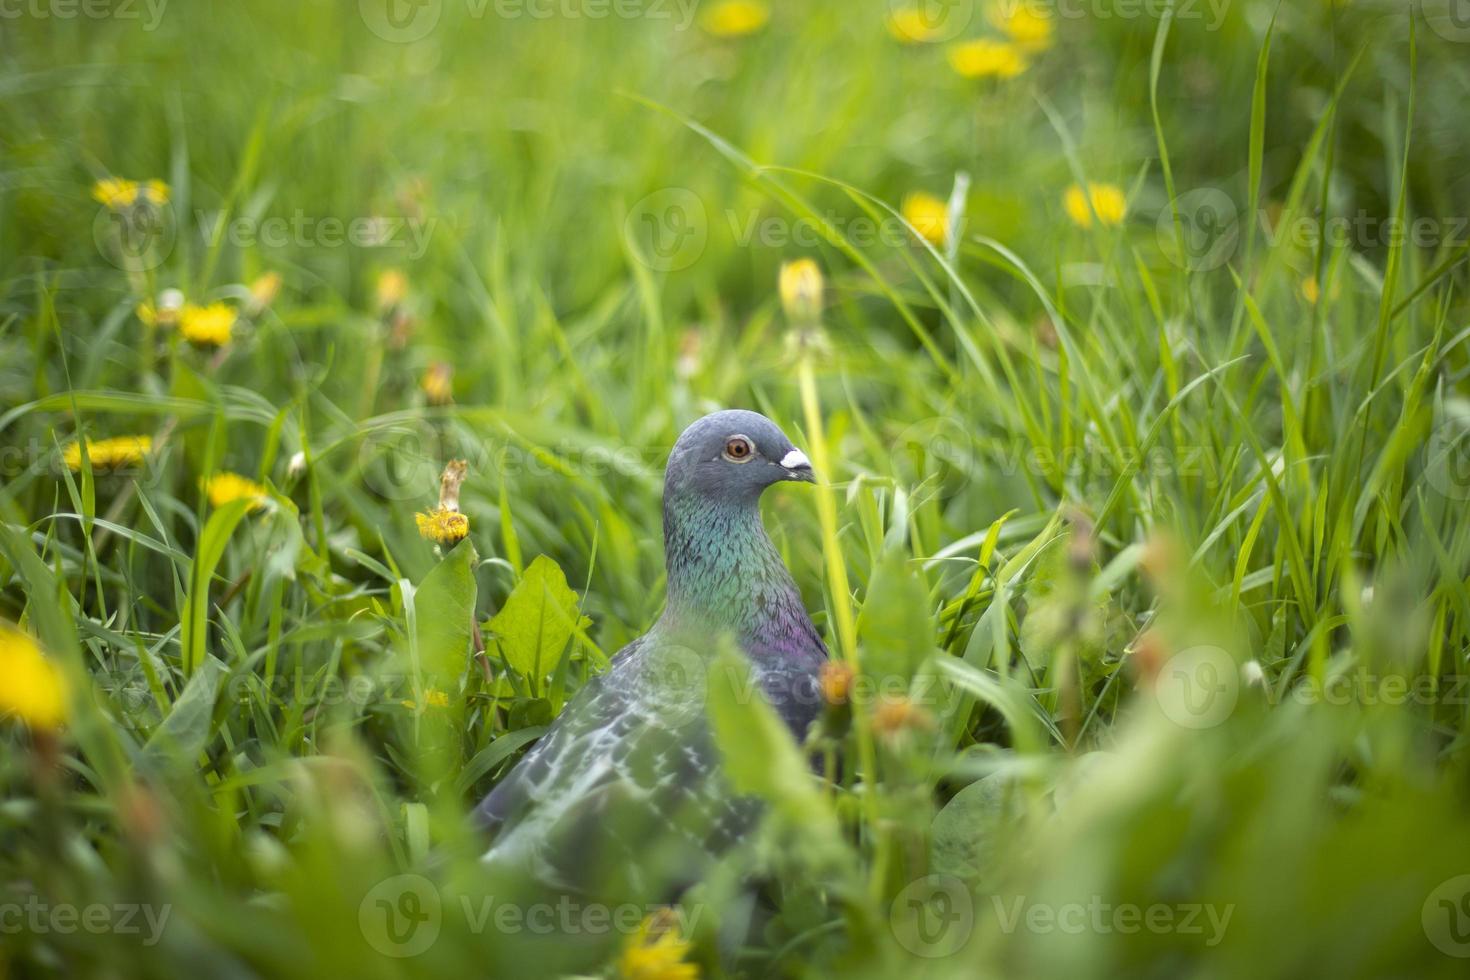 pombo na grama verde. pombo de raça pura. pássaro da cidade. foto